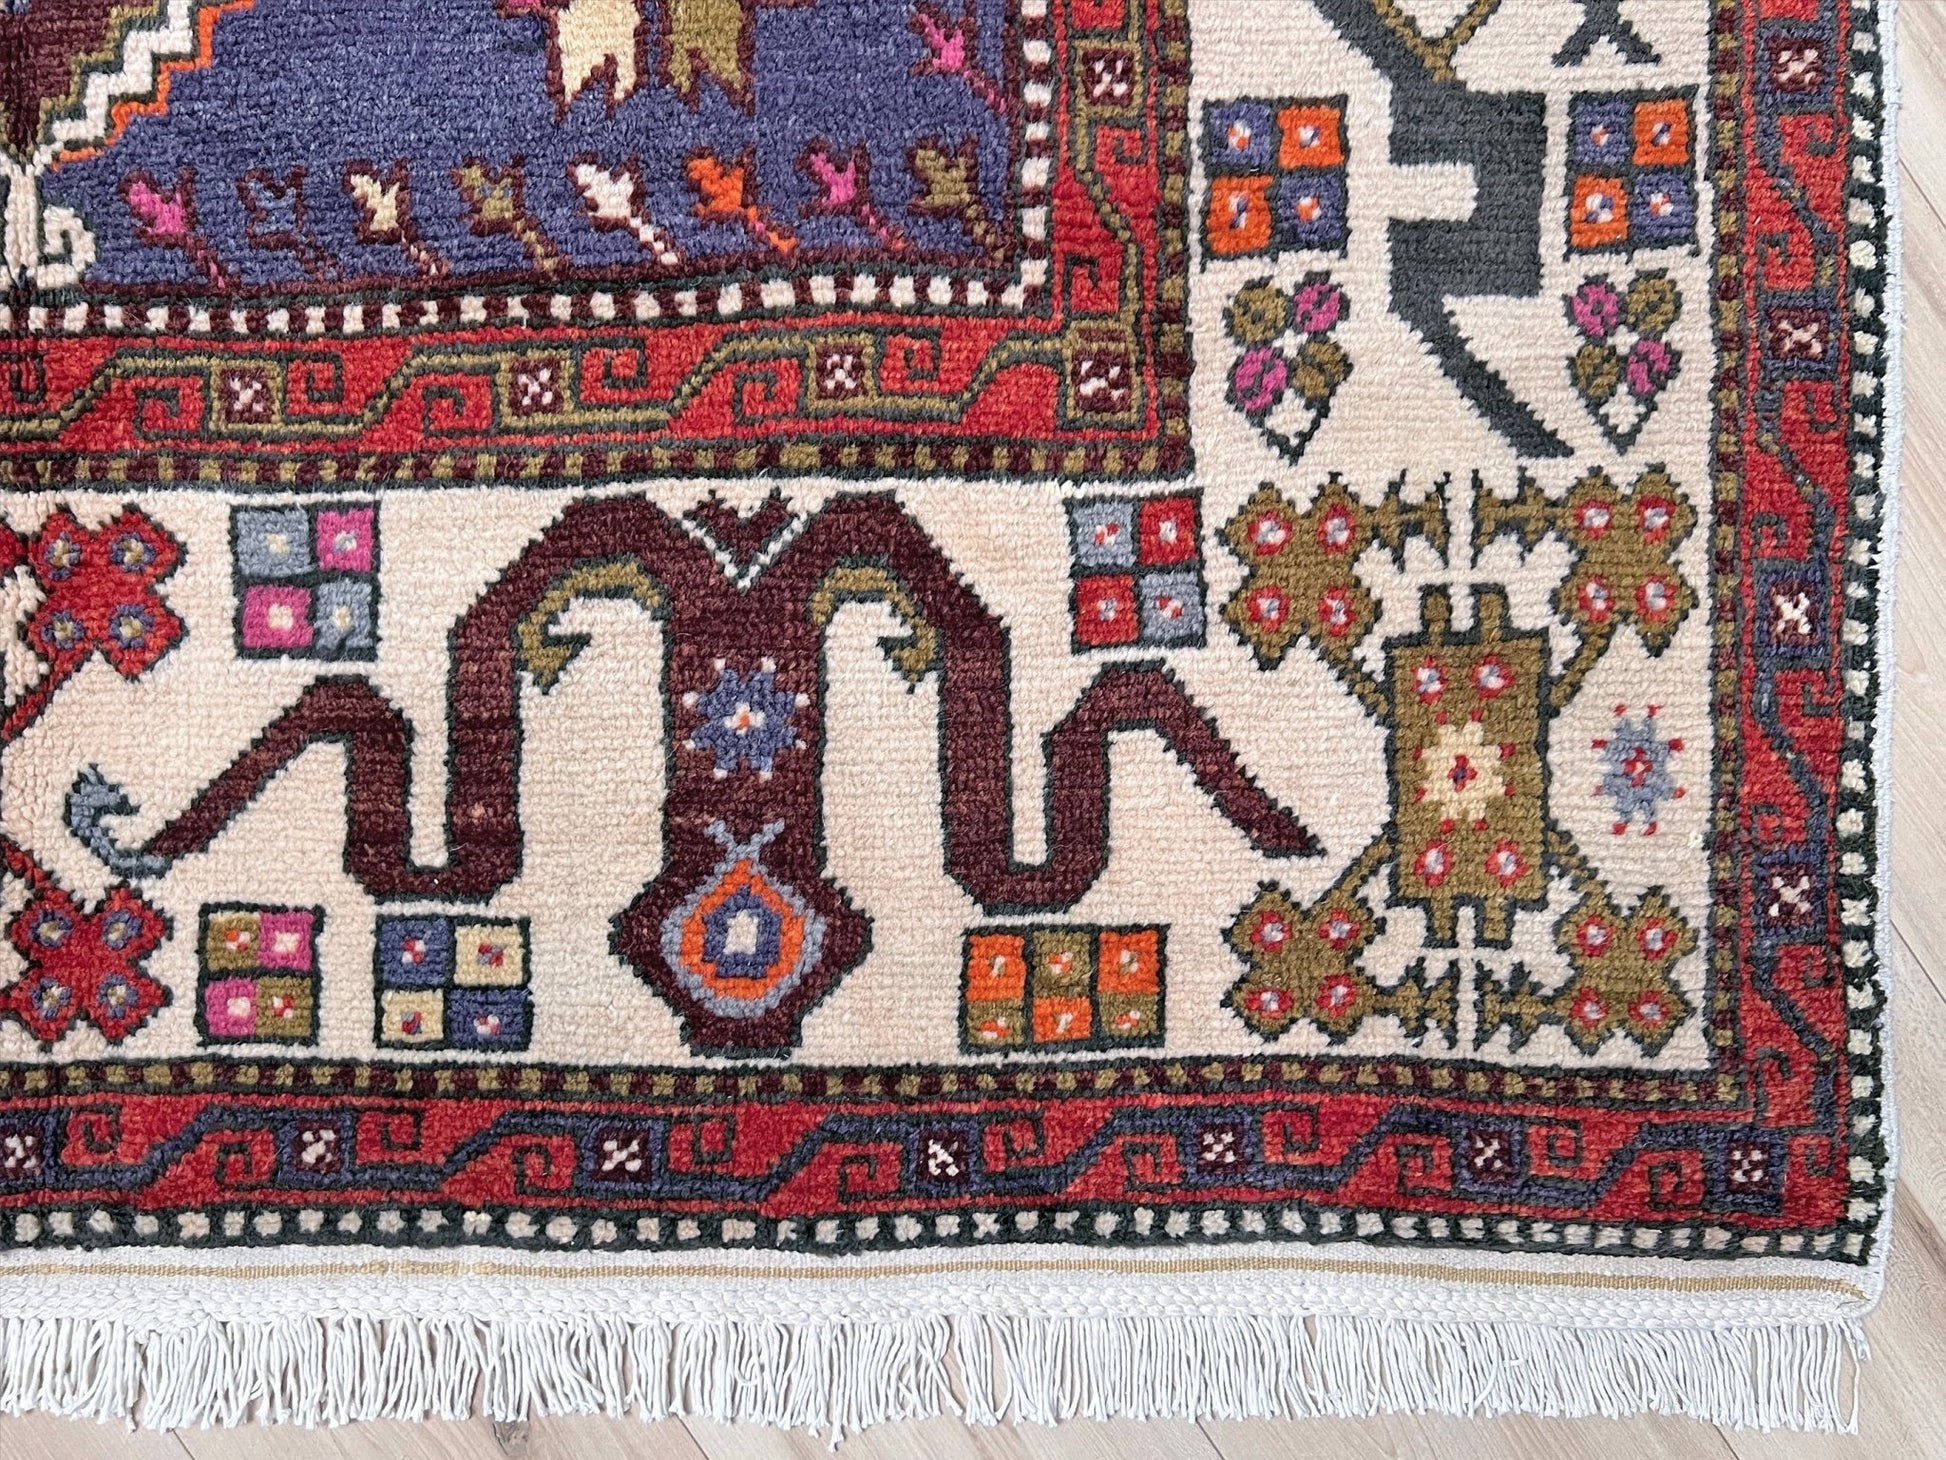 Manisa Vintage Turkish rug shop SF Bay Area. Handmade vibrant colorful 6x8 wool rug store Palo Alto. Buy colorful rug online.